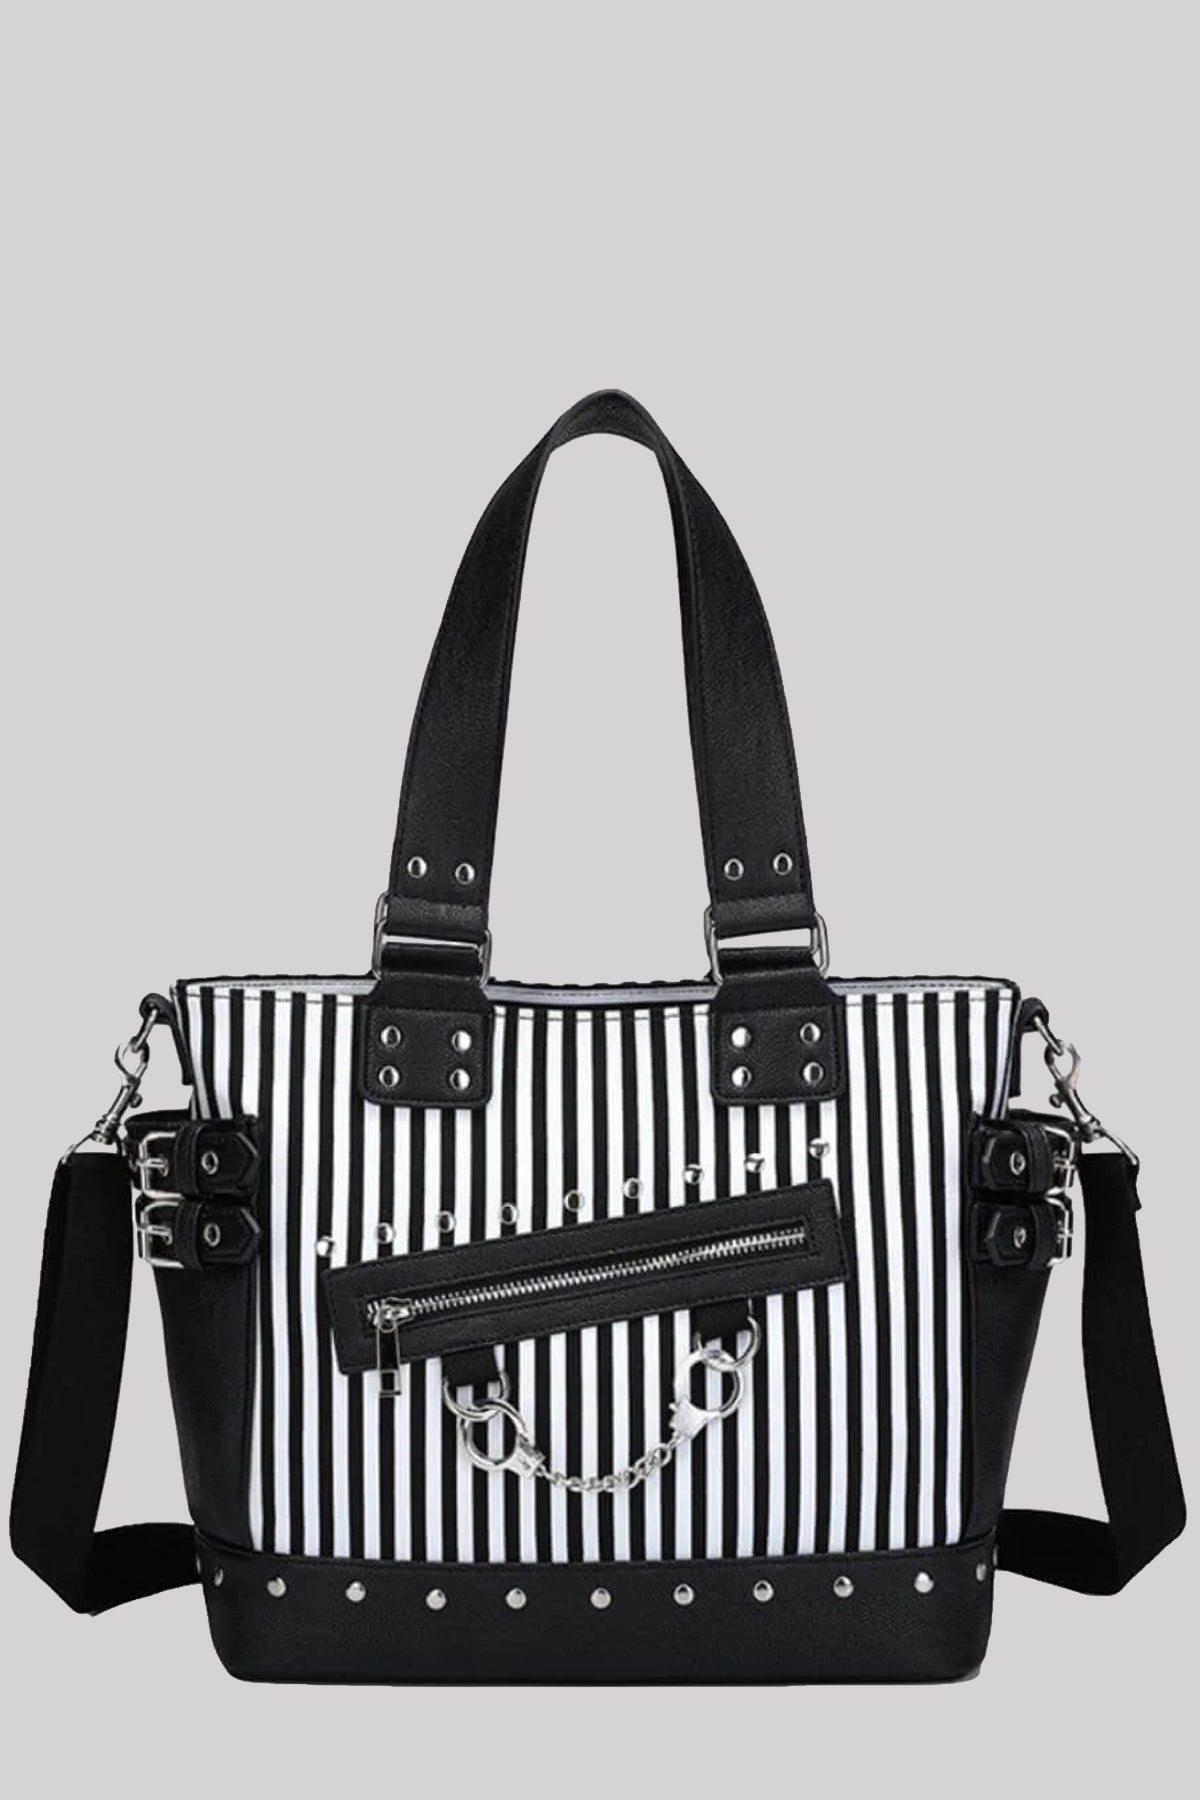 Ro Rox Phoenix Stripe Black-White Handcuff Bag